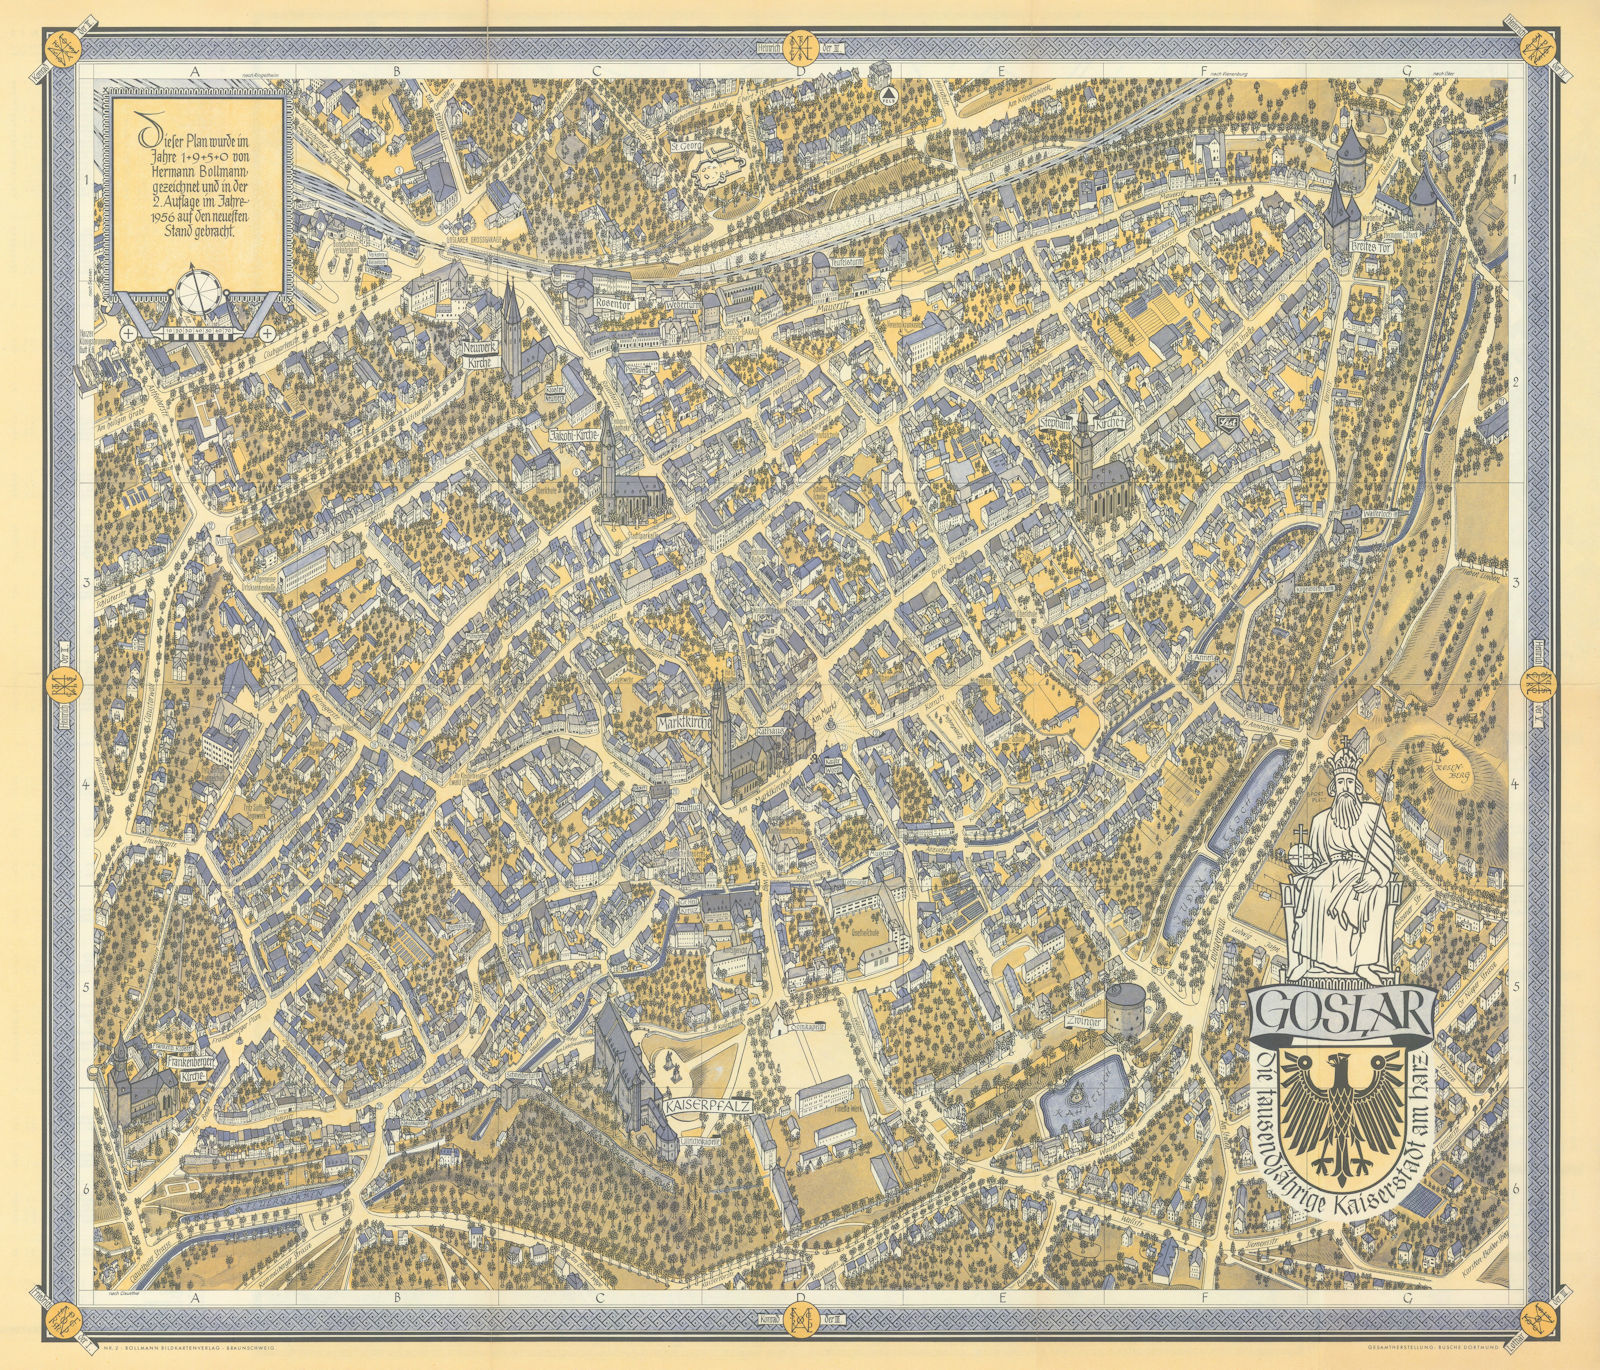 Goslar pictorial bird's eye view city plan #2 by Hermann Bollmann 1956 old map